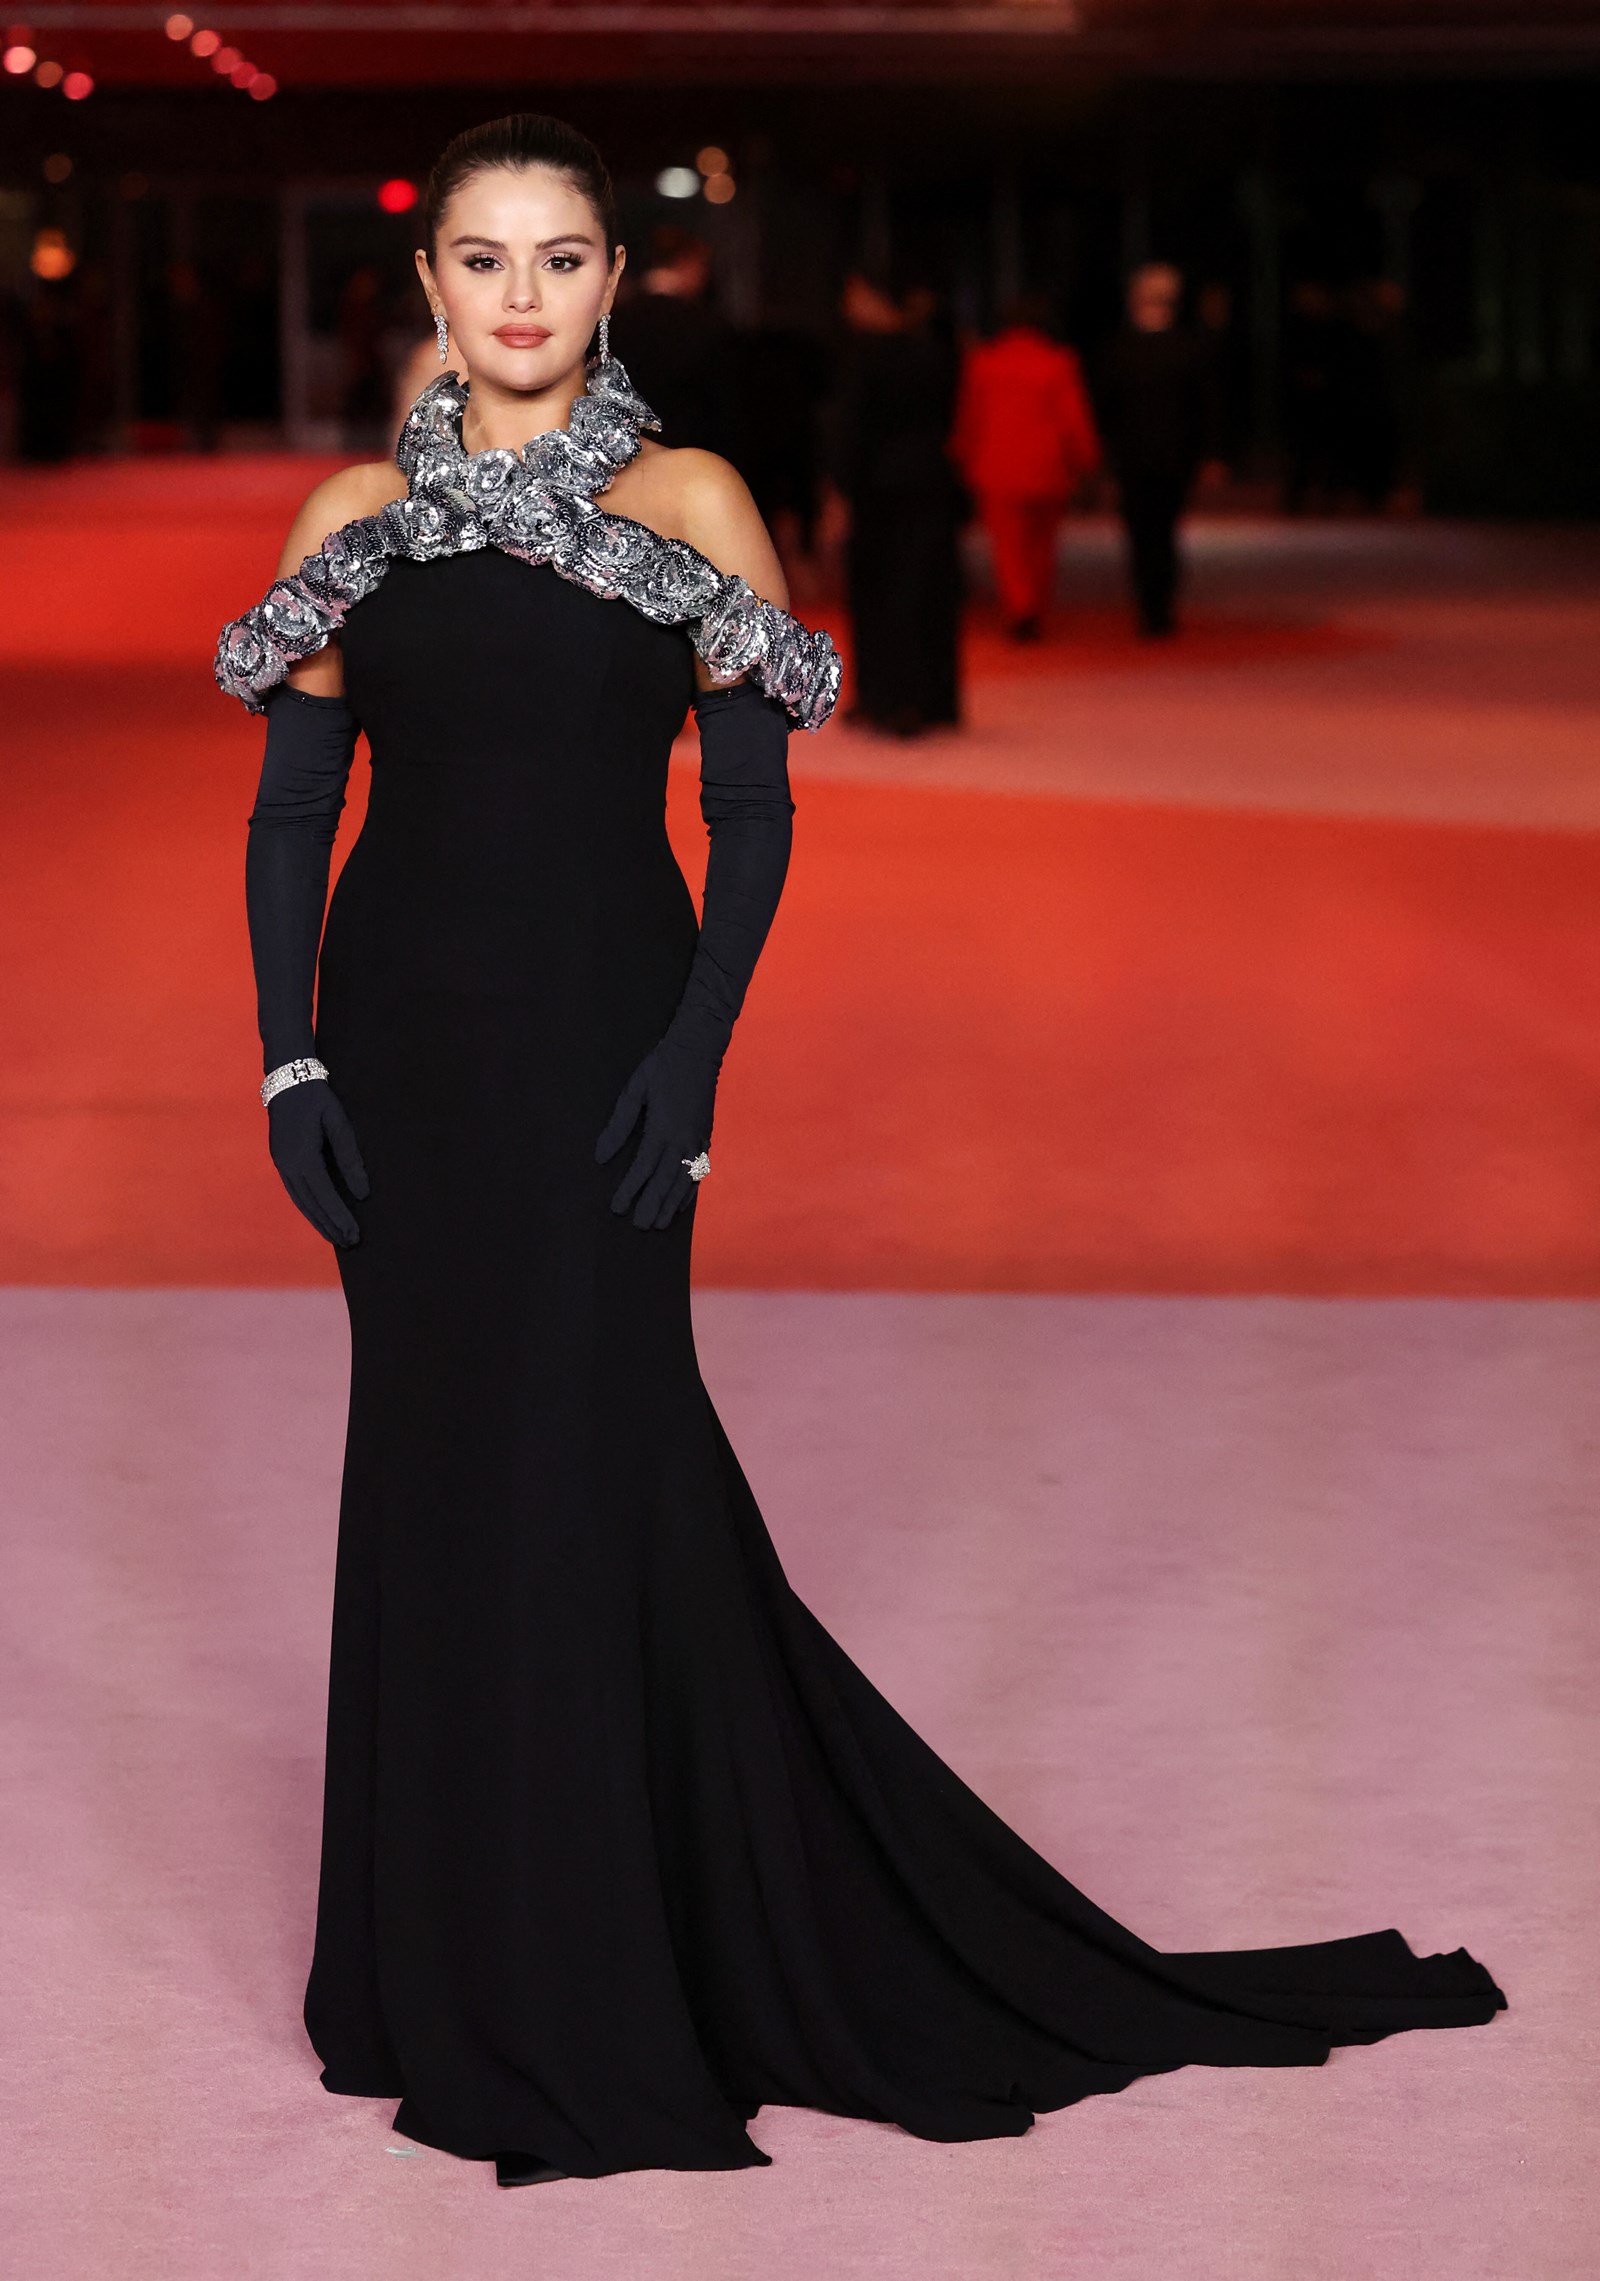 Selena Gomez Walked the Carpet in a Deconstructed Blazer Dress